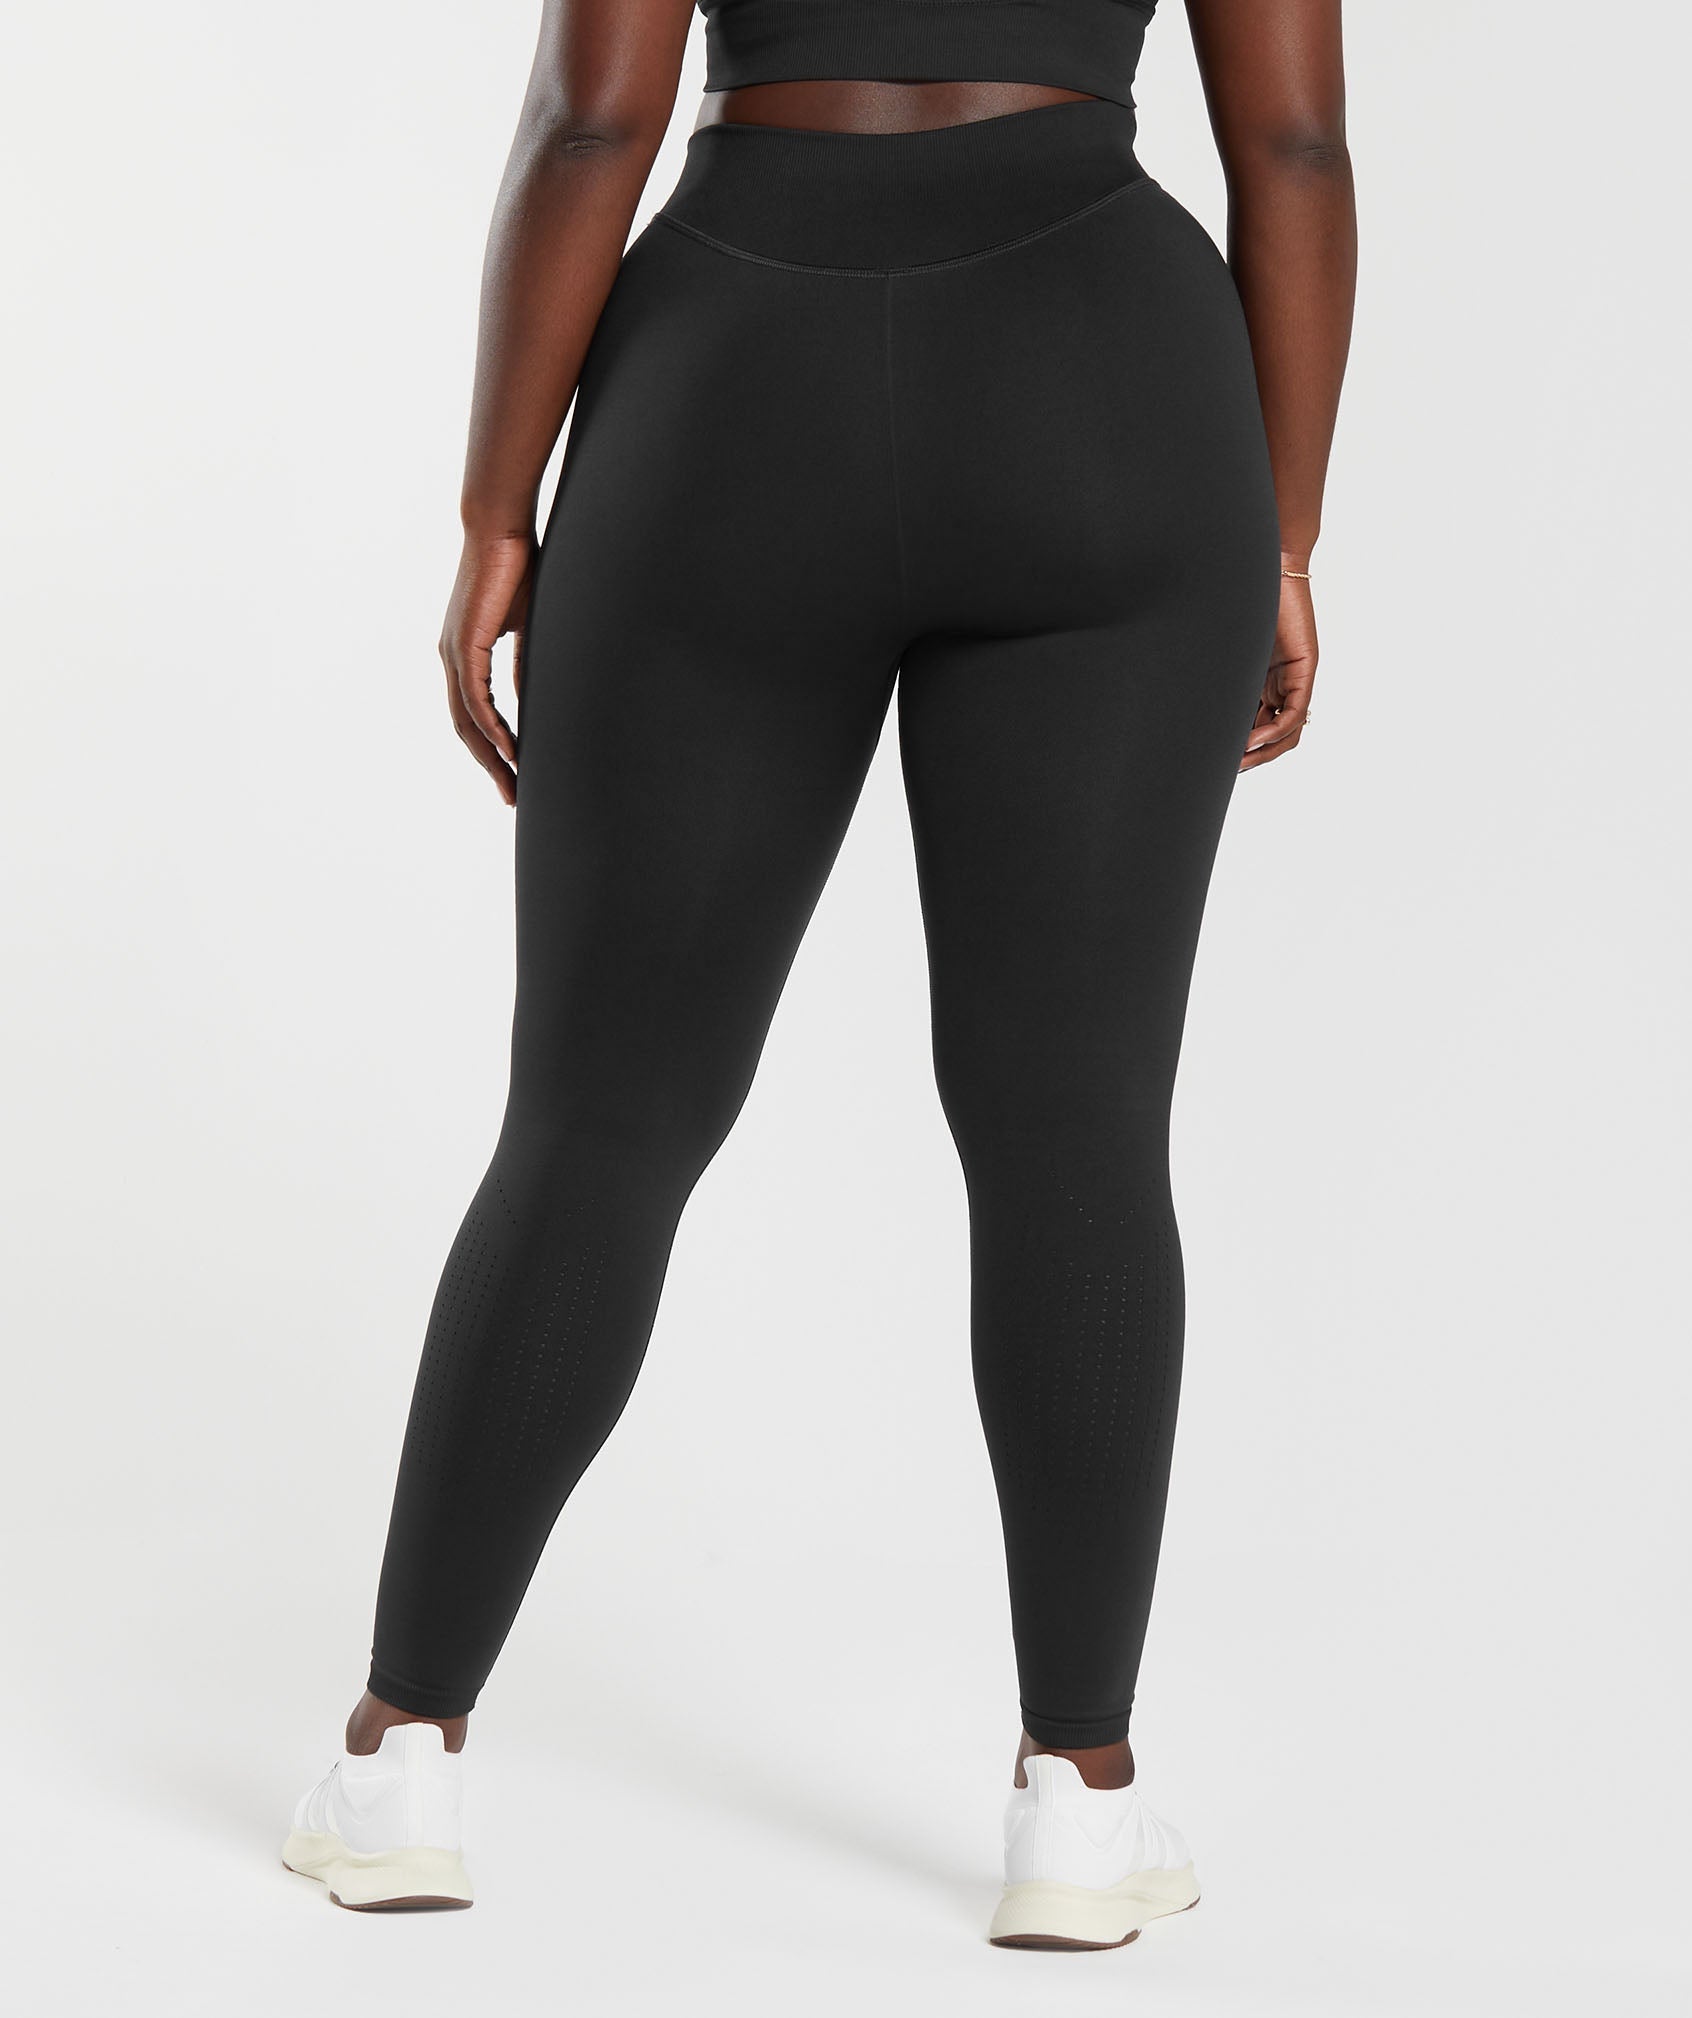 Gymshark Leggings Black Size XL - $40 (38% Off Retail) - From Emma